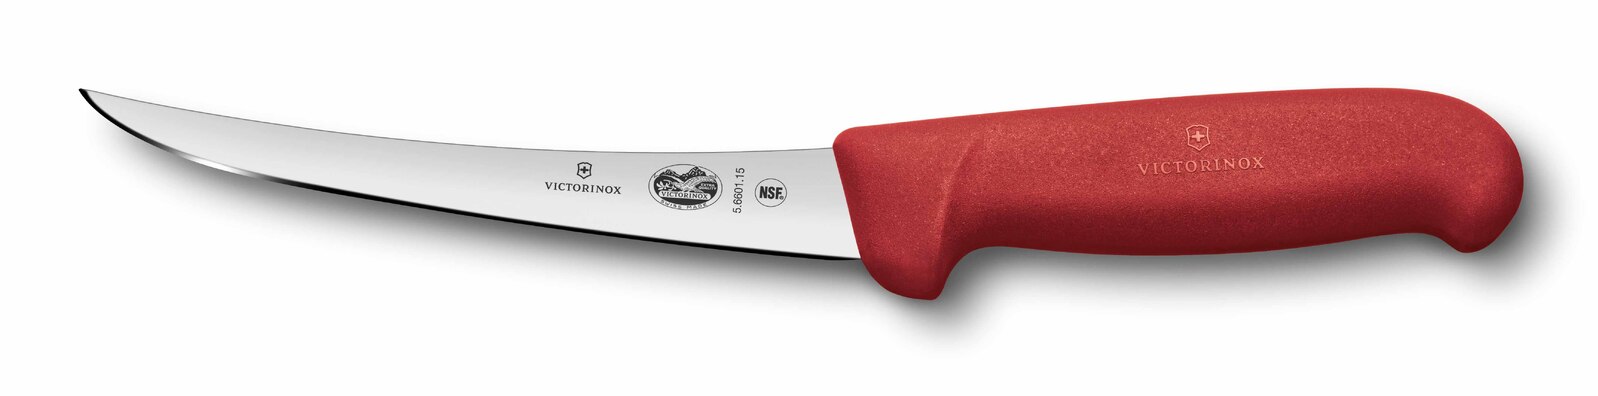 Victorinox Fibrox Curved Narrow Blade Boning Knife 12cm Red